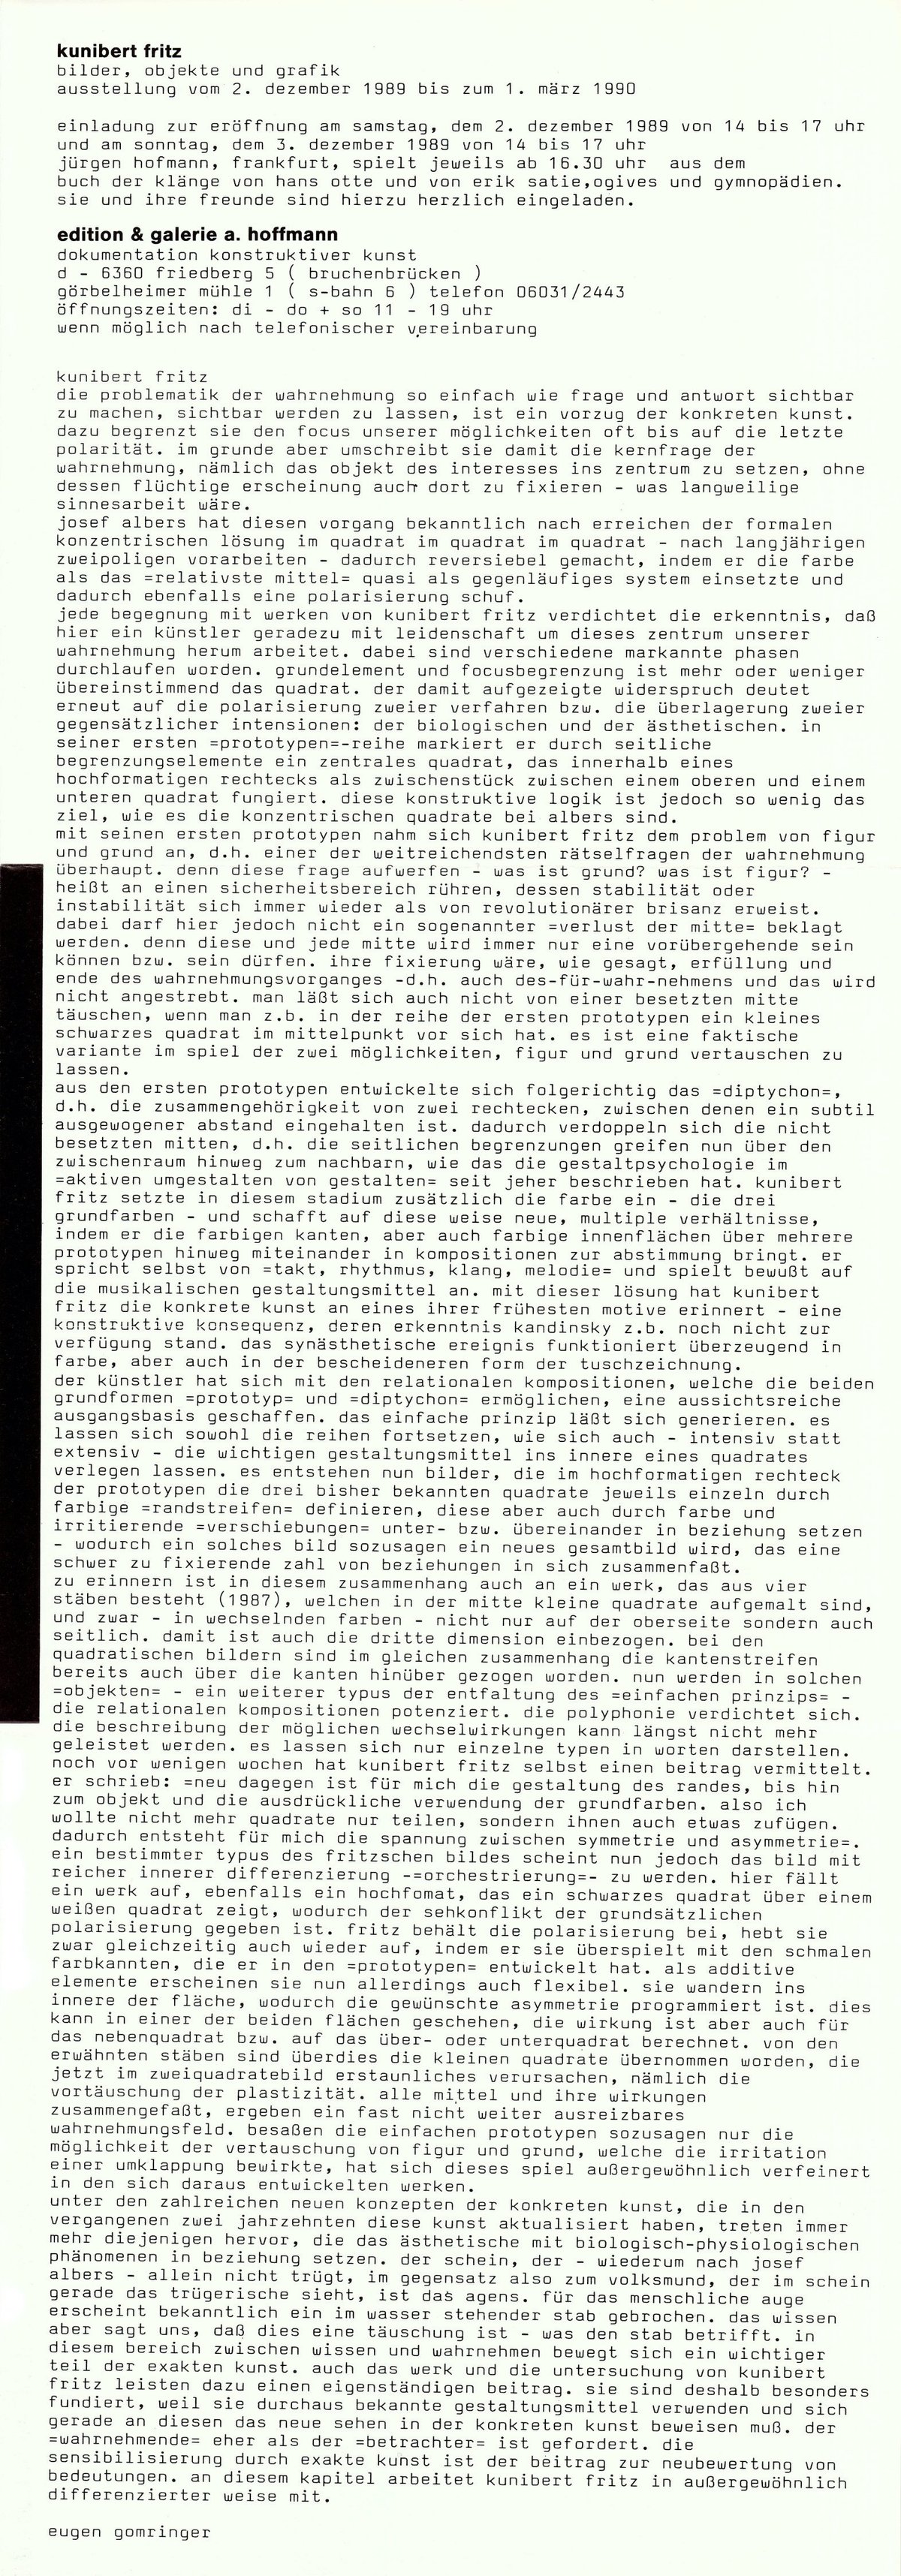 exhibition invitation unfolded halfway: &quot;kunibert fritz—bilder, objekte und grafik&quot; by wolfgang schmidt, 1989